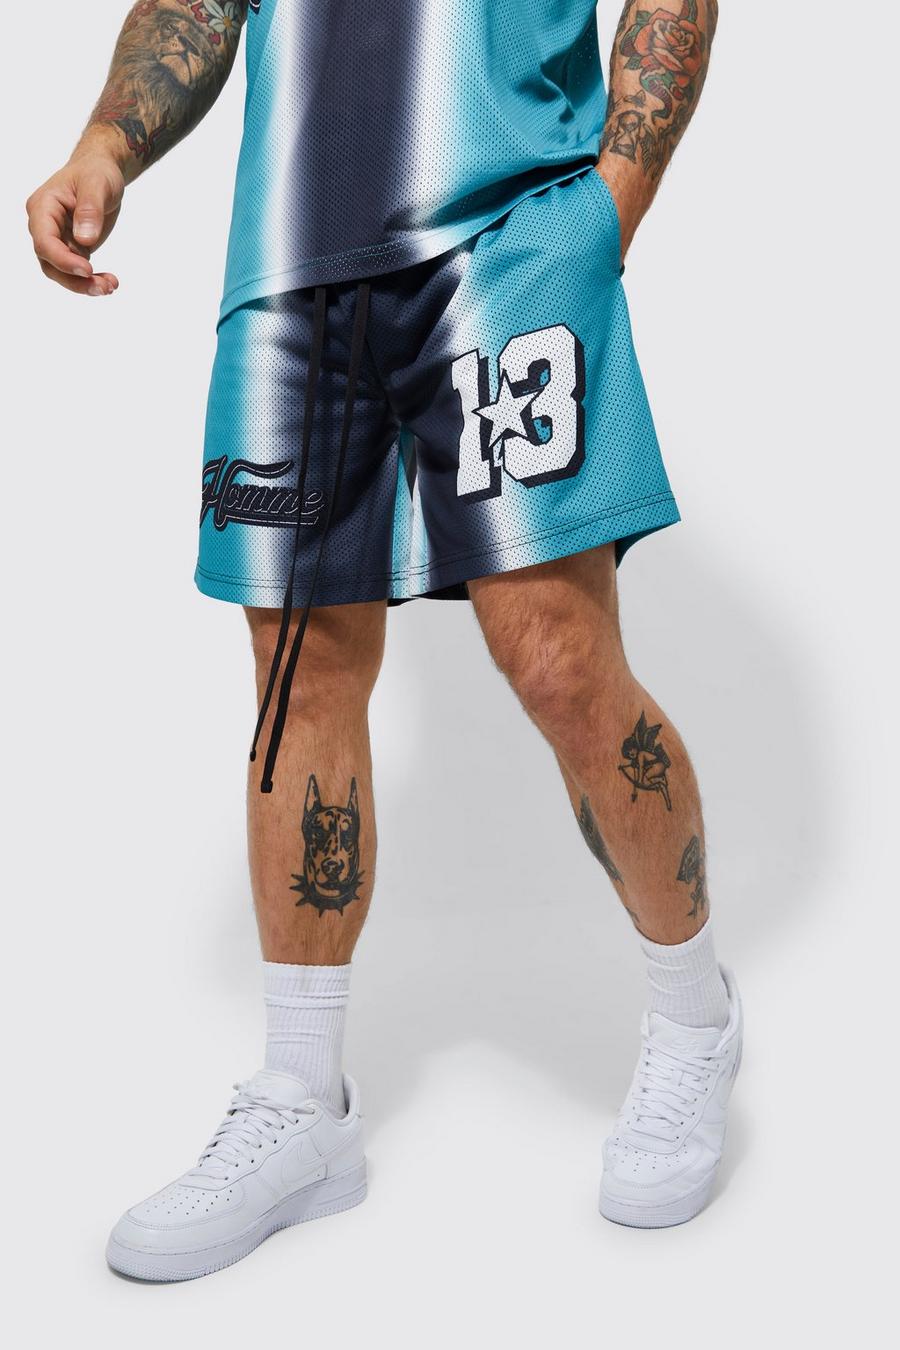 Pantaloncini da basket Homme in rete con stampa sfumata, Teal verde